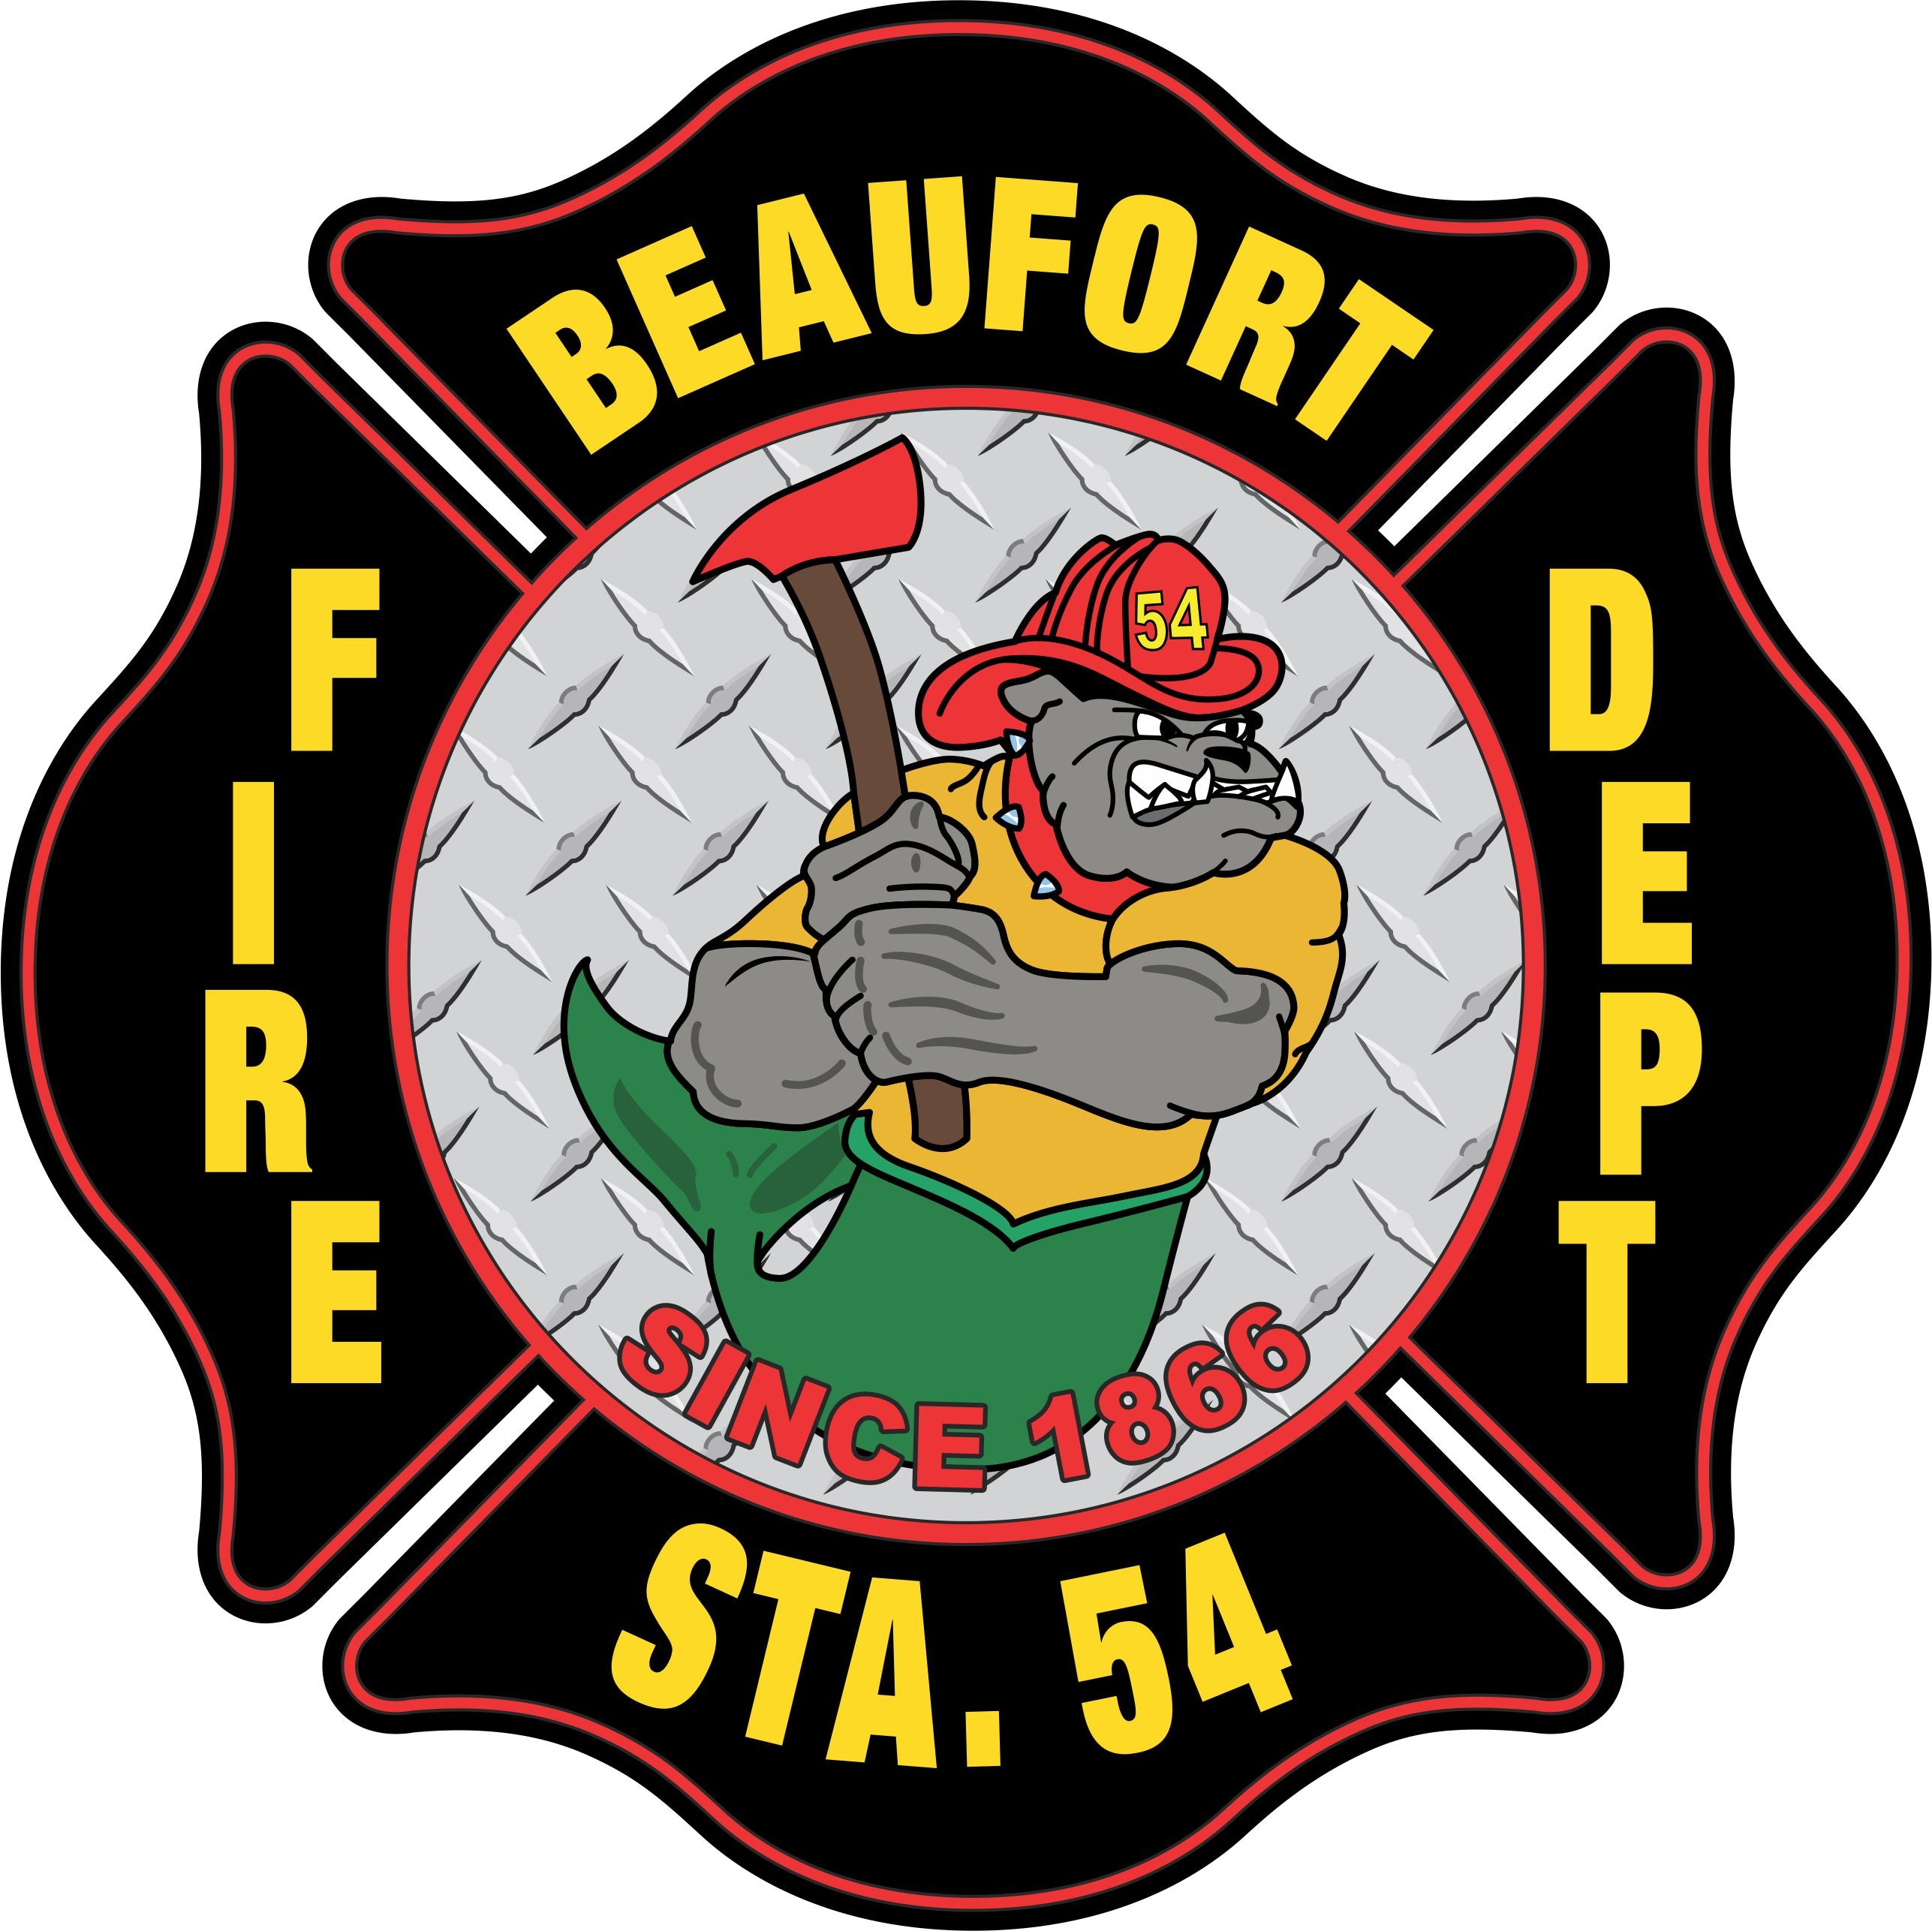 Beaufort Station 54 Customer Decal - Powercall Sirens LLC